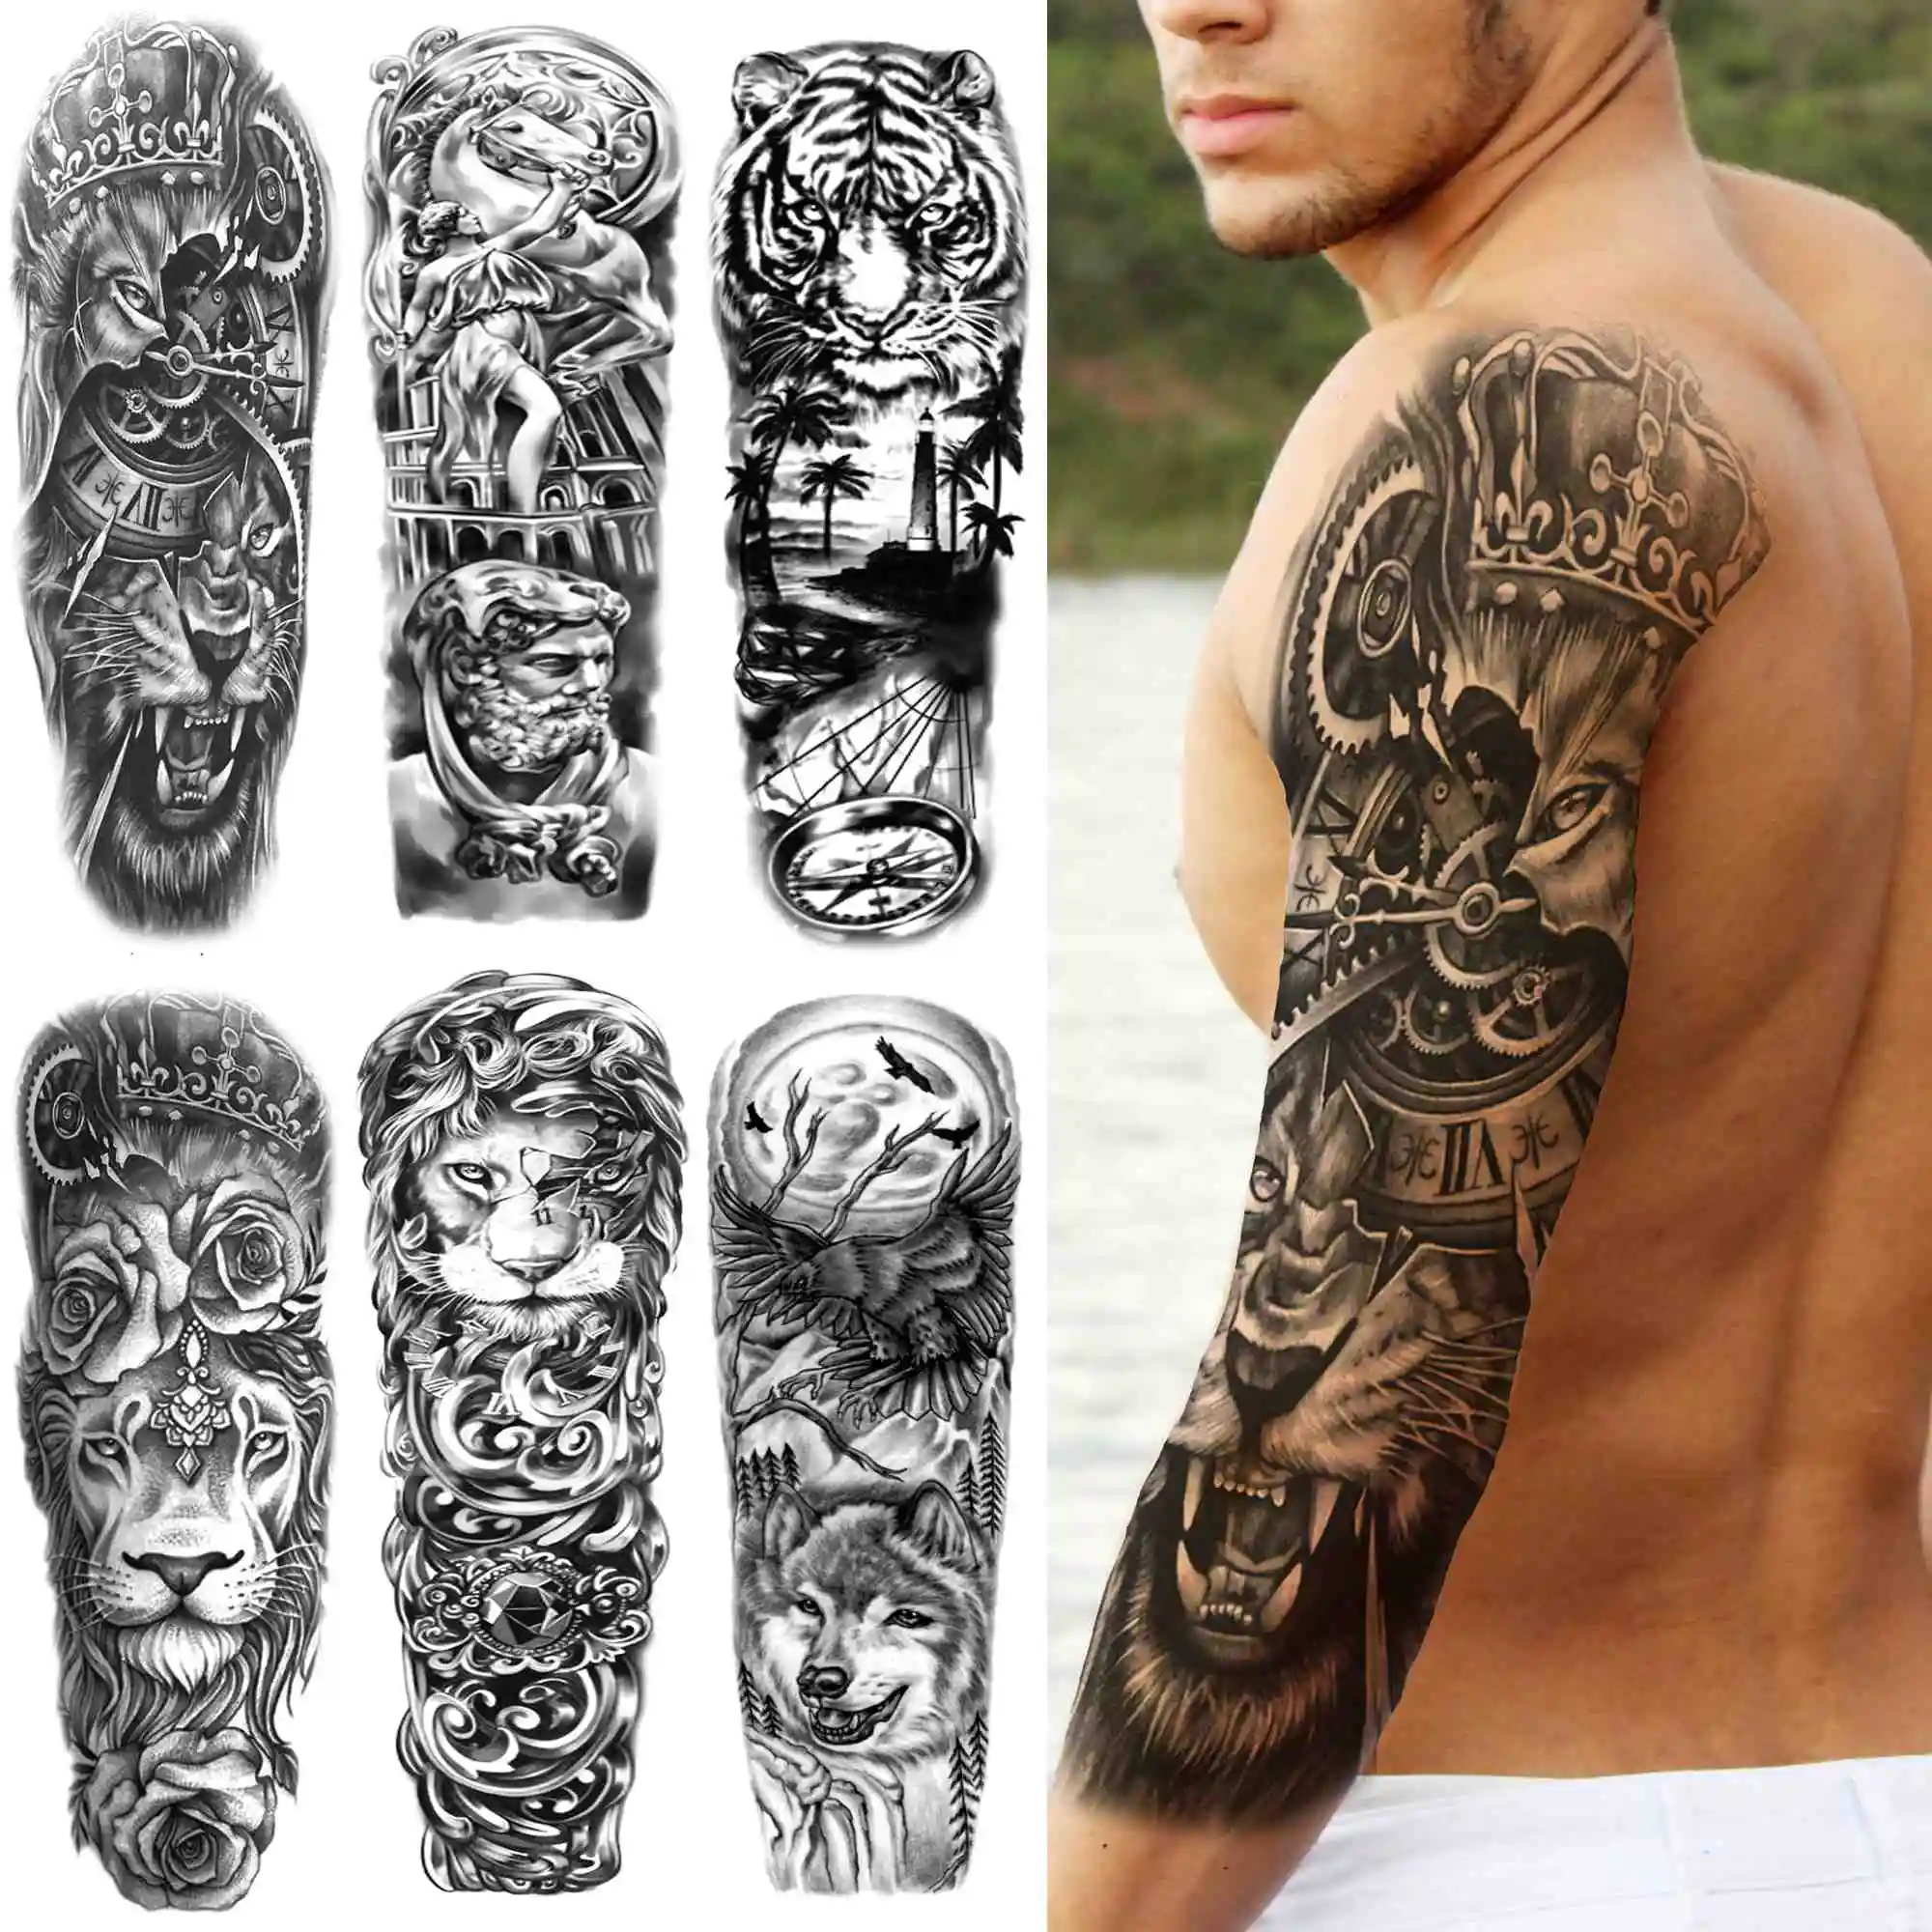 Black Lion King Temporary Tattoos Sleeve For Men Women Fake Gear Tiger Full Arm Tattoo Sticker Realistic Animal Tatoo Waterproof